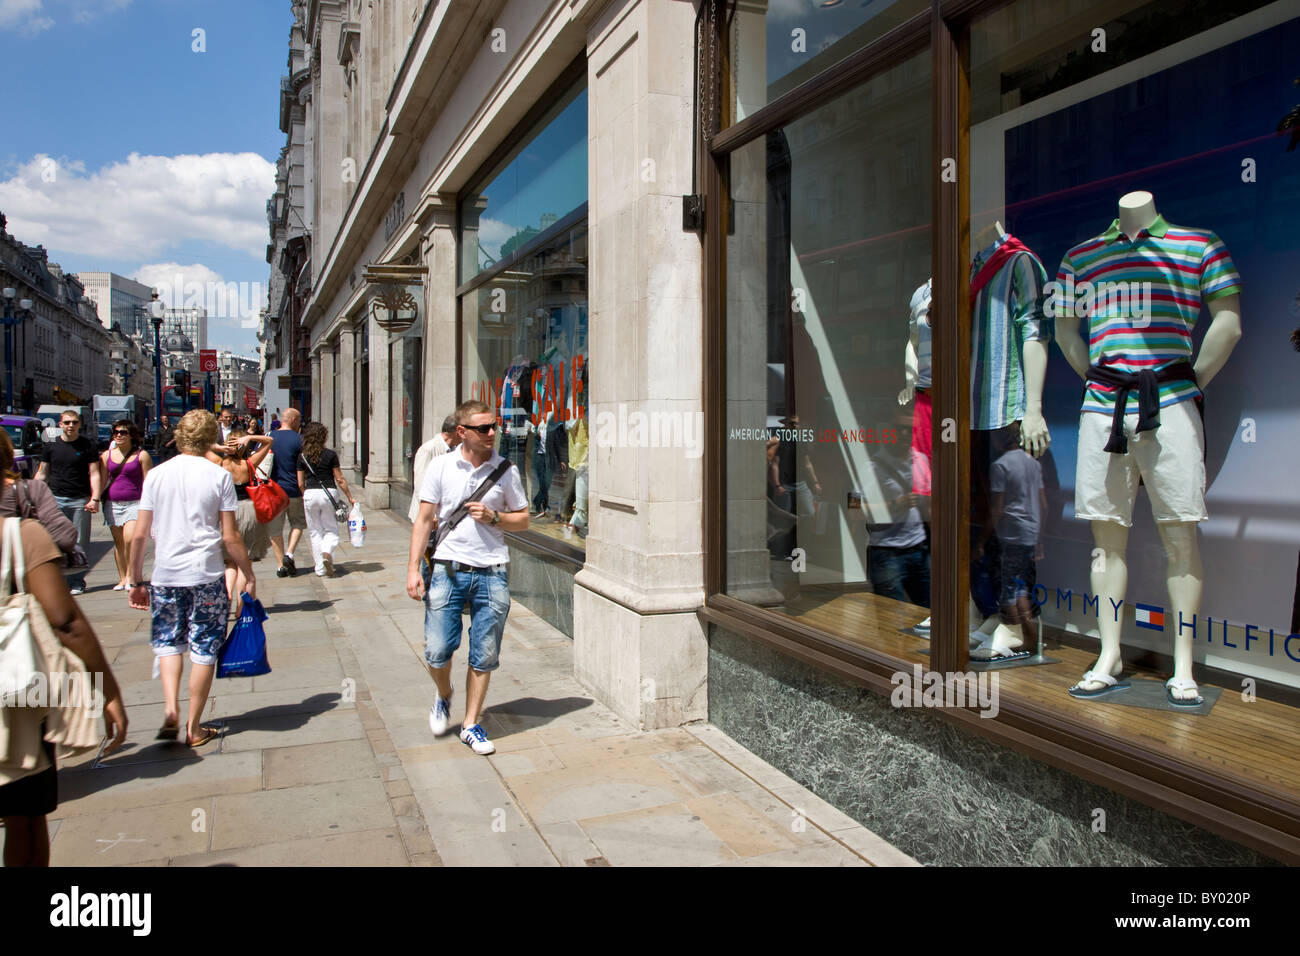 Shopping on Regents Street Stock Photo